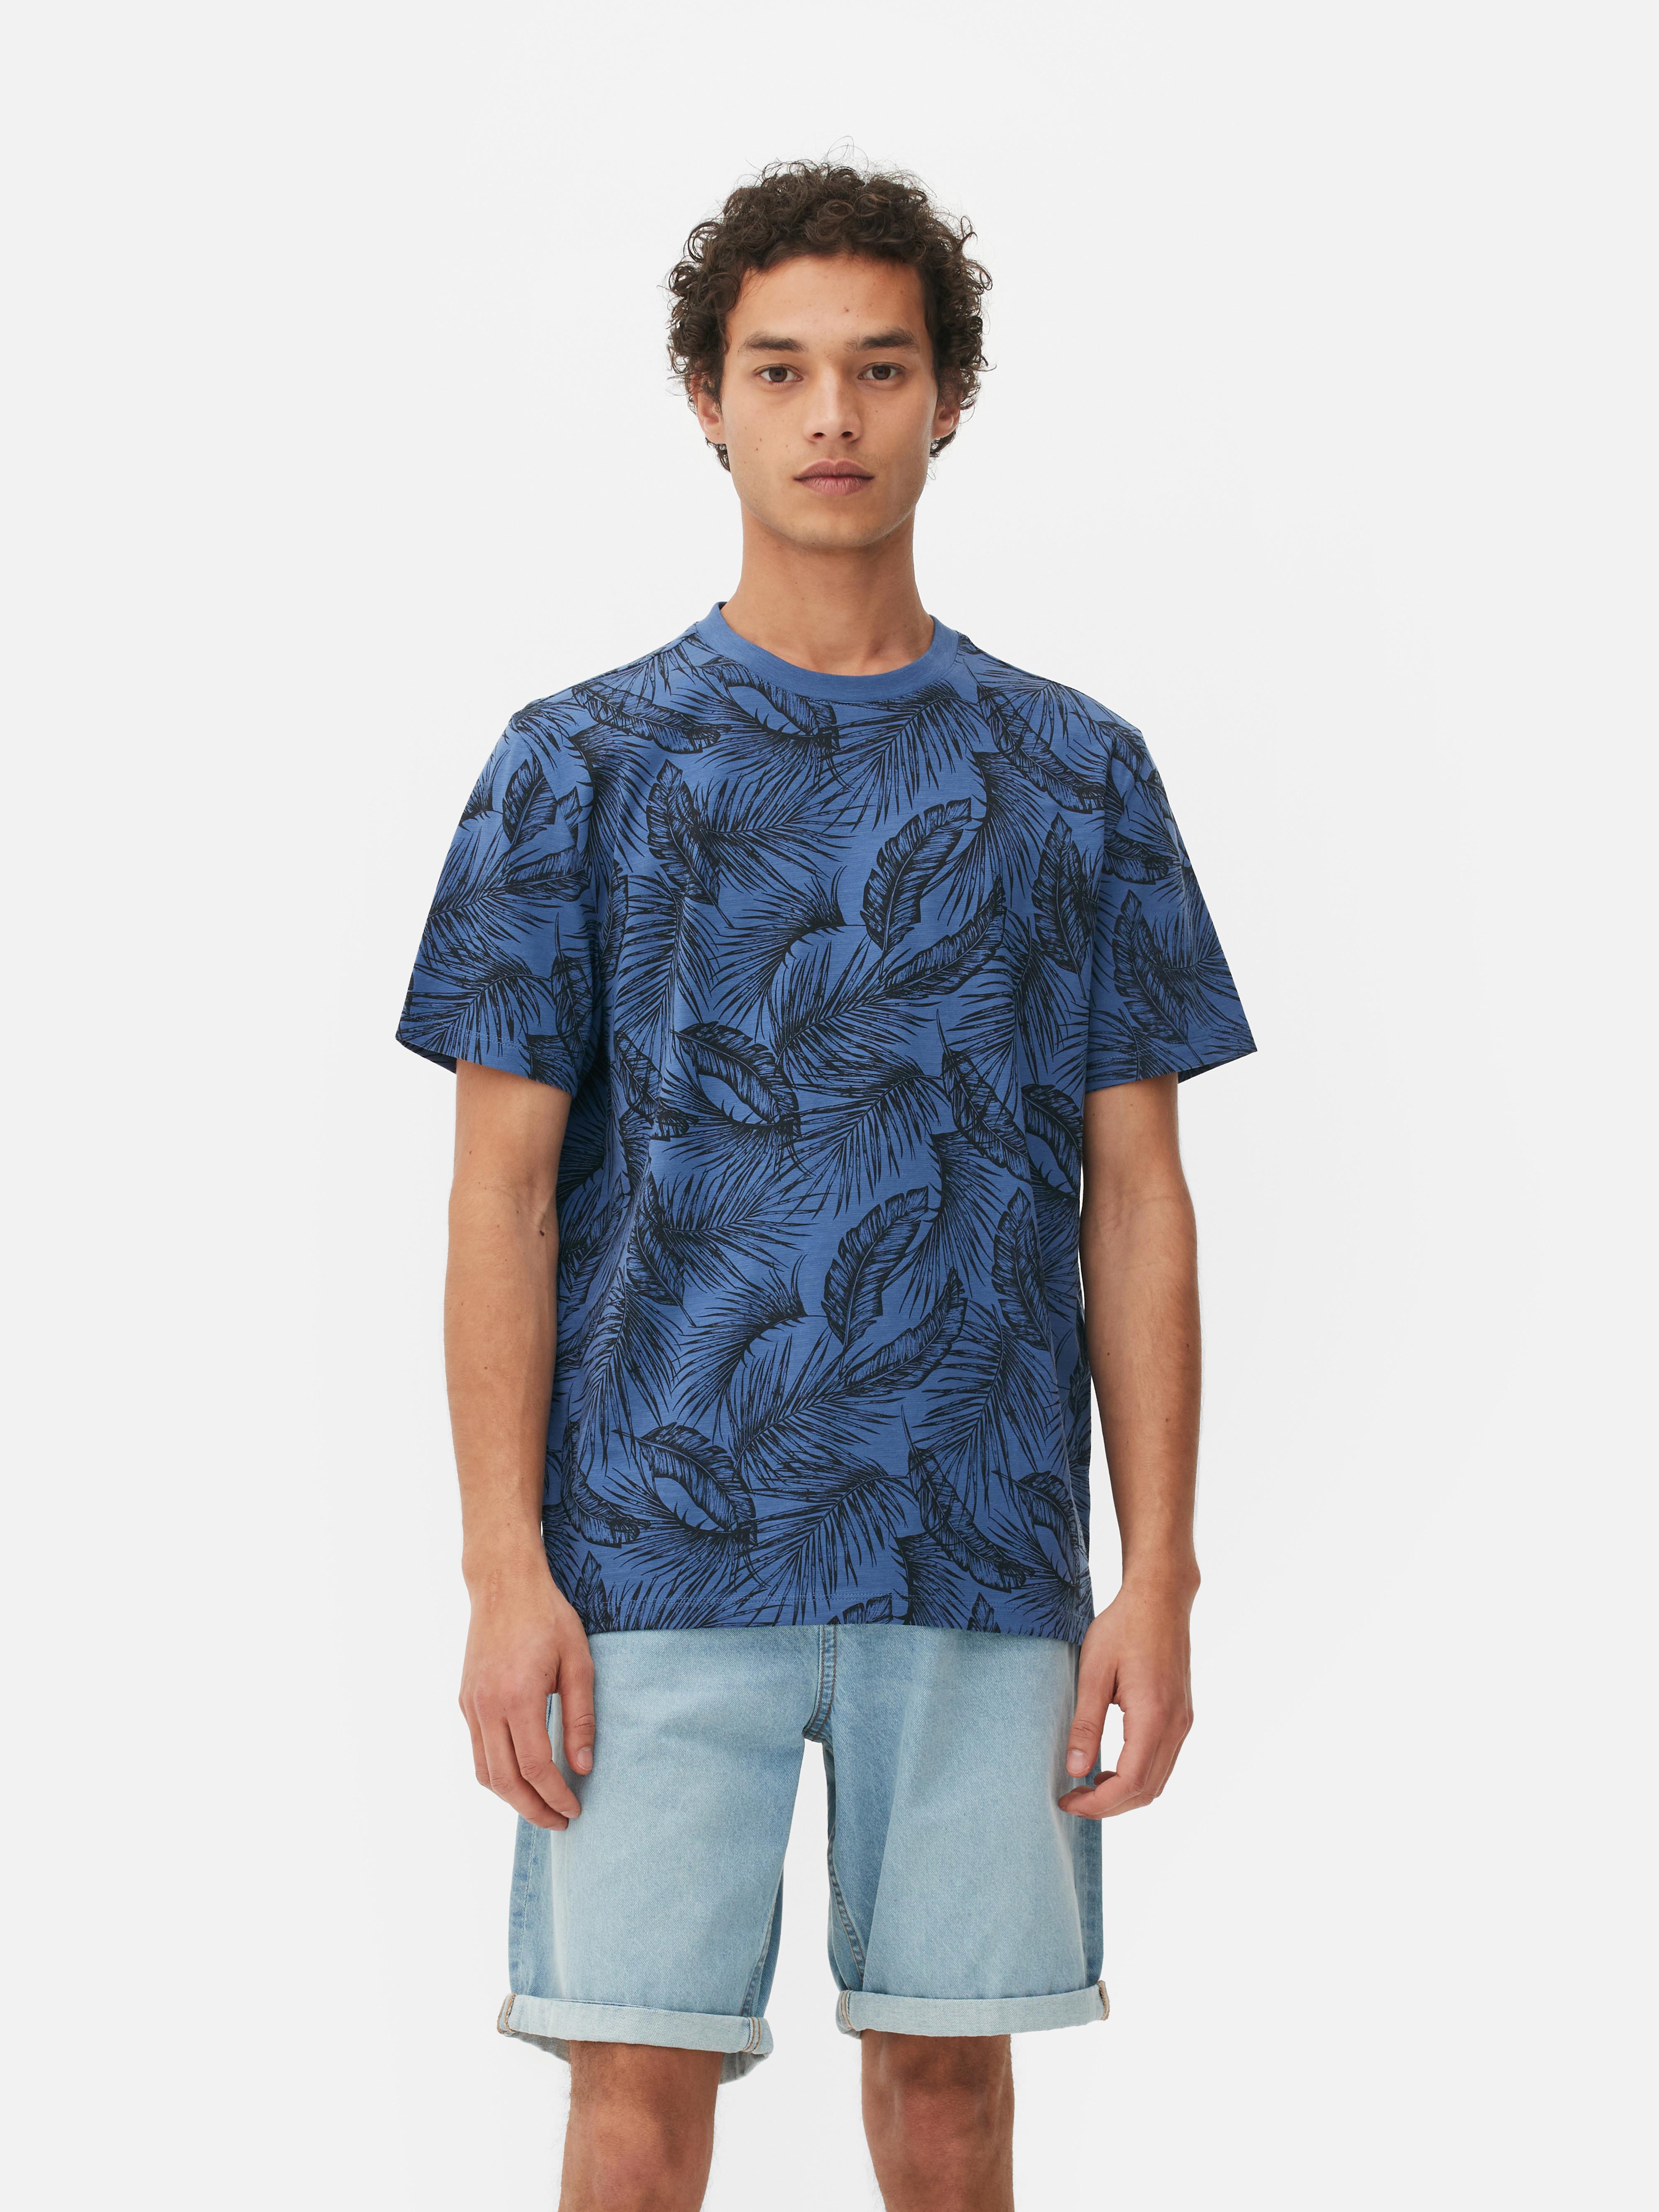 Mens Navy Botanical Print T-shirt | Primark